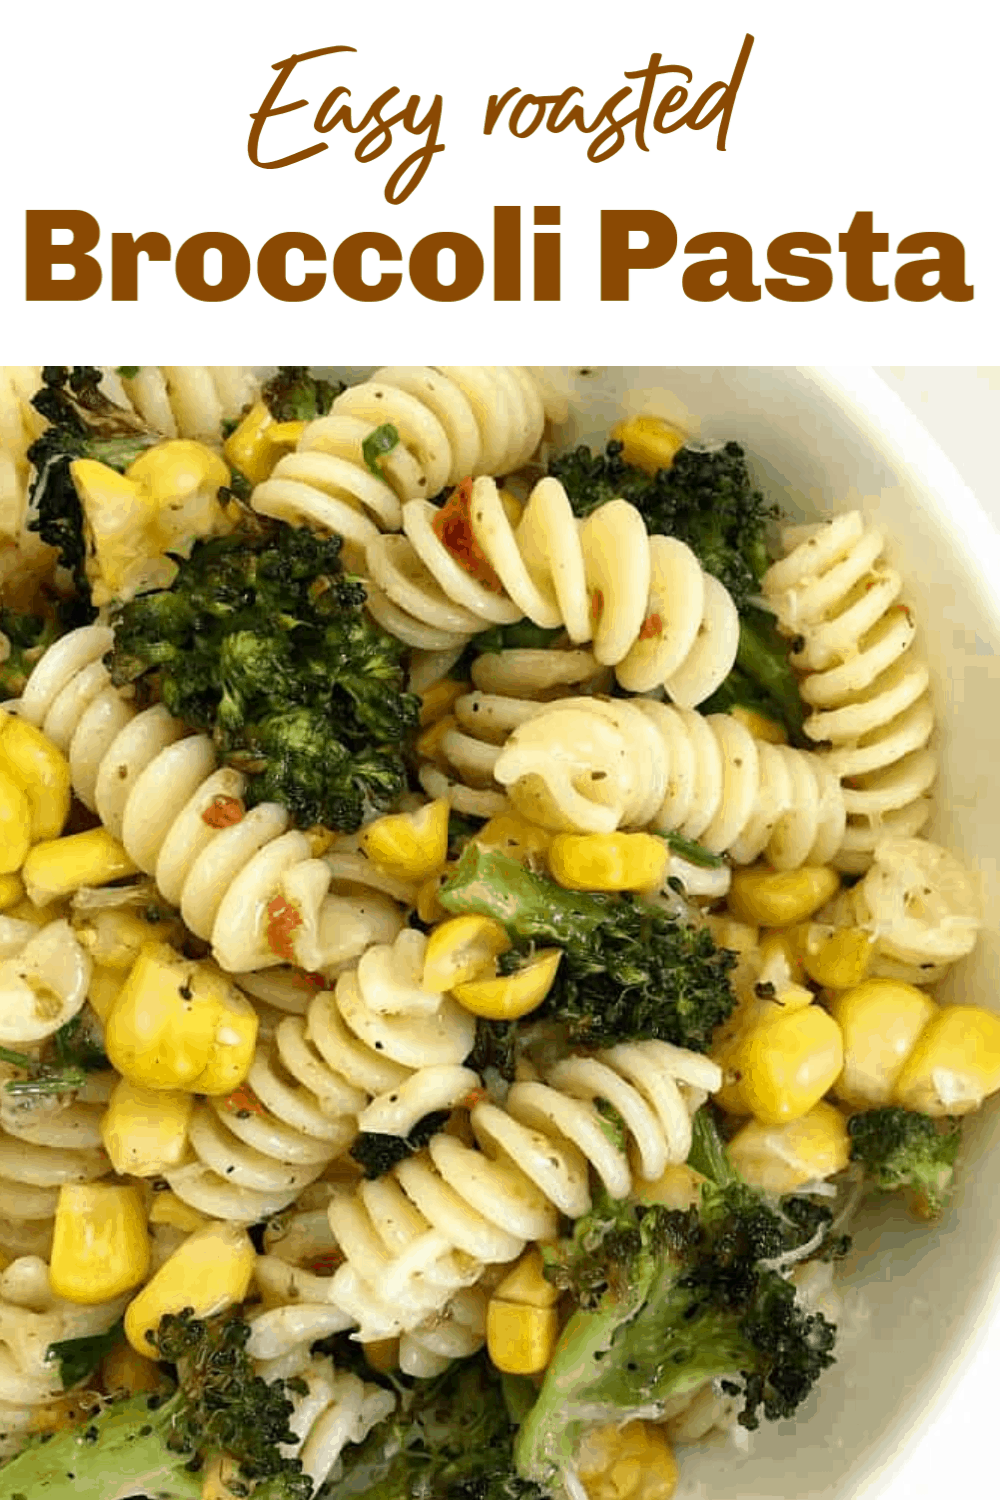 Spicy Broccoli Corn Pasta - Vintage Kitchen Notes